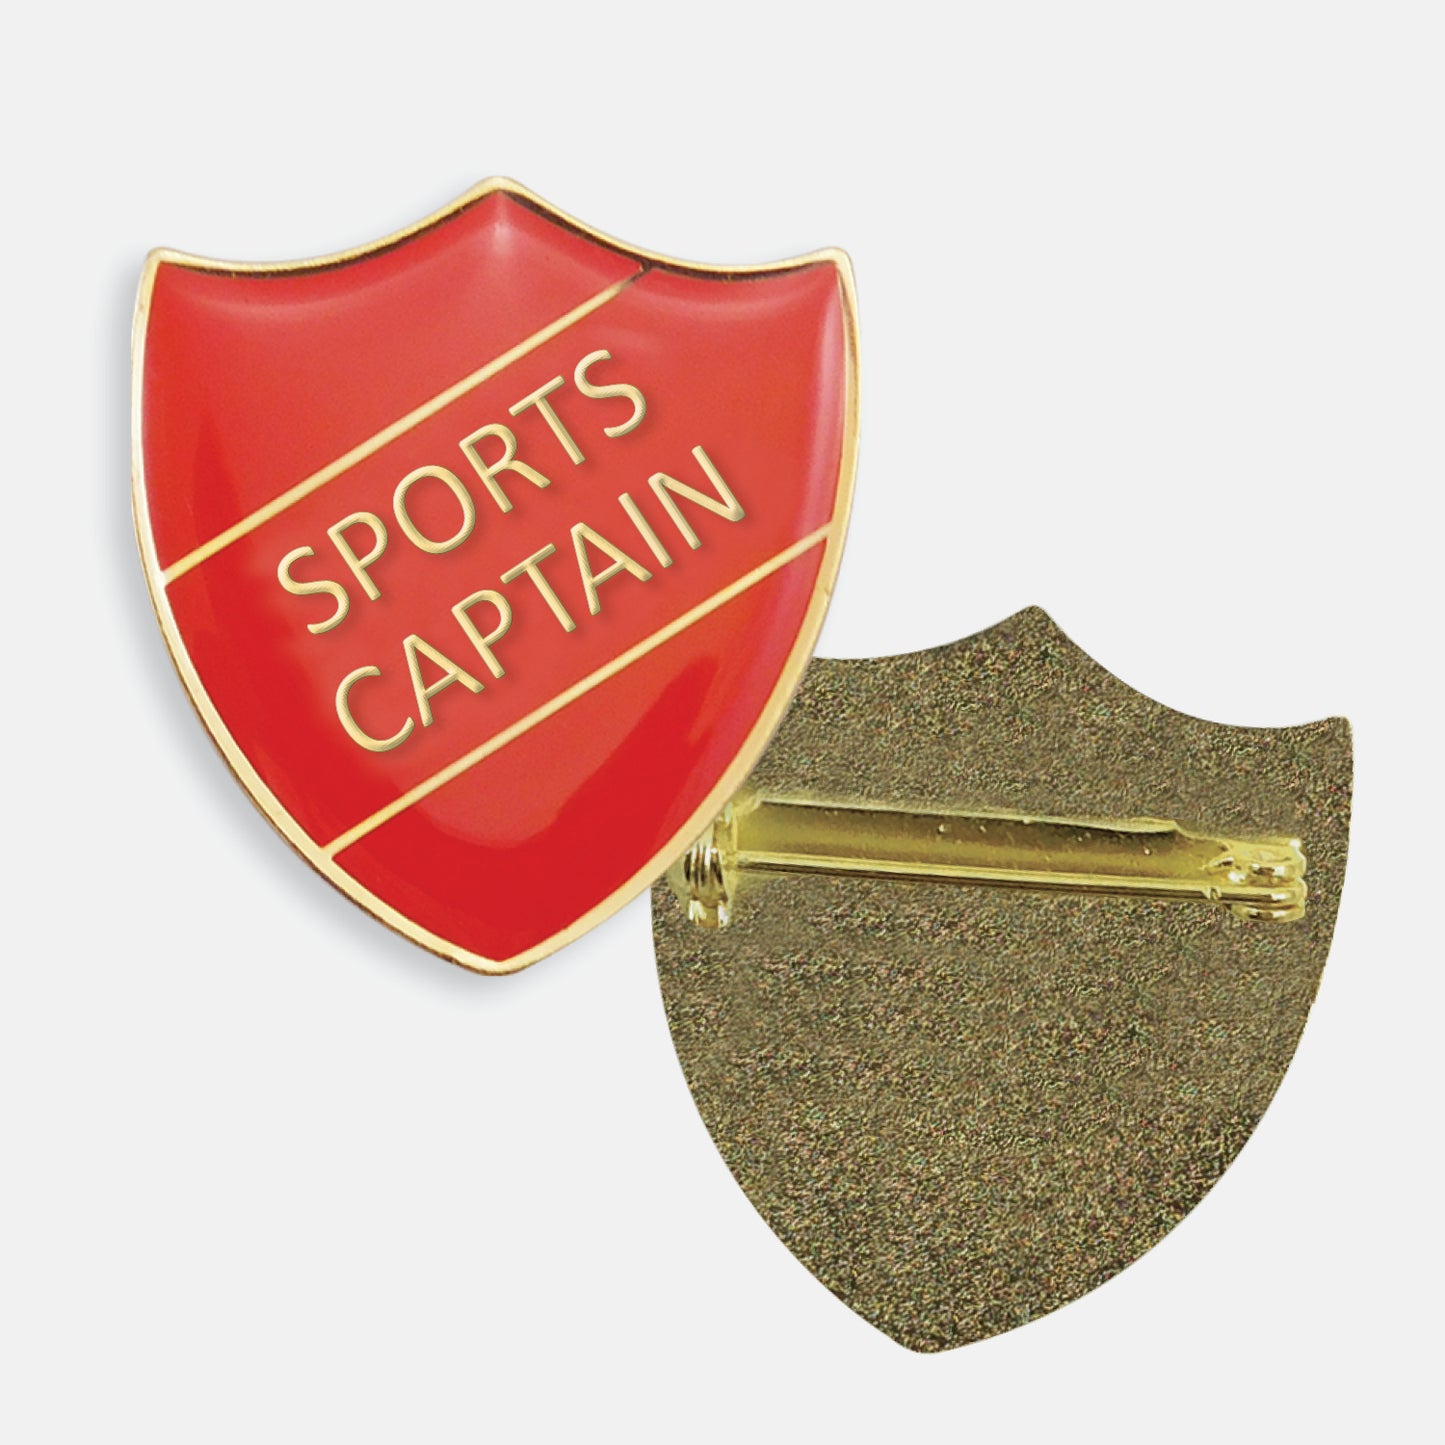 Enamel Sports Captain Shield Badge